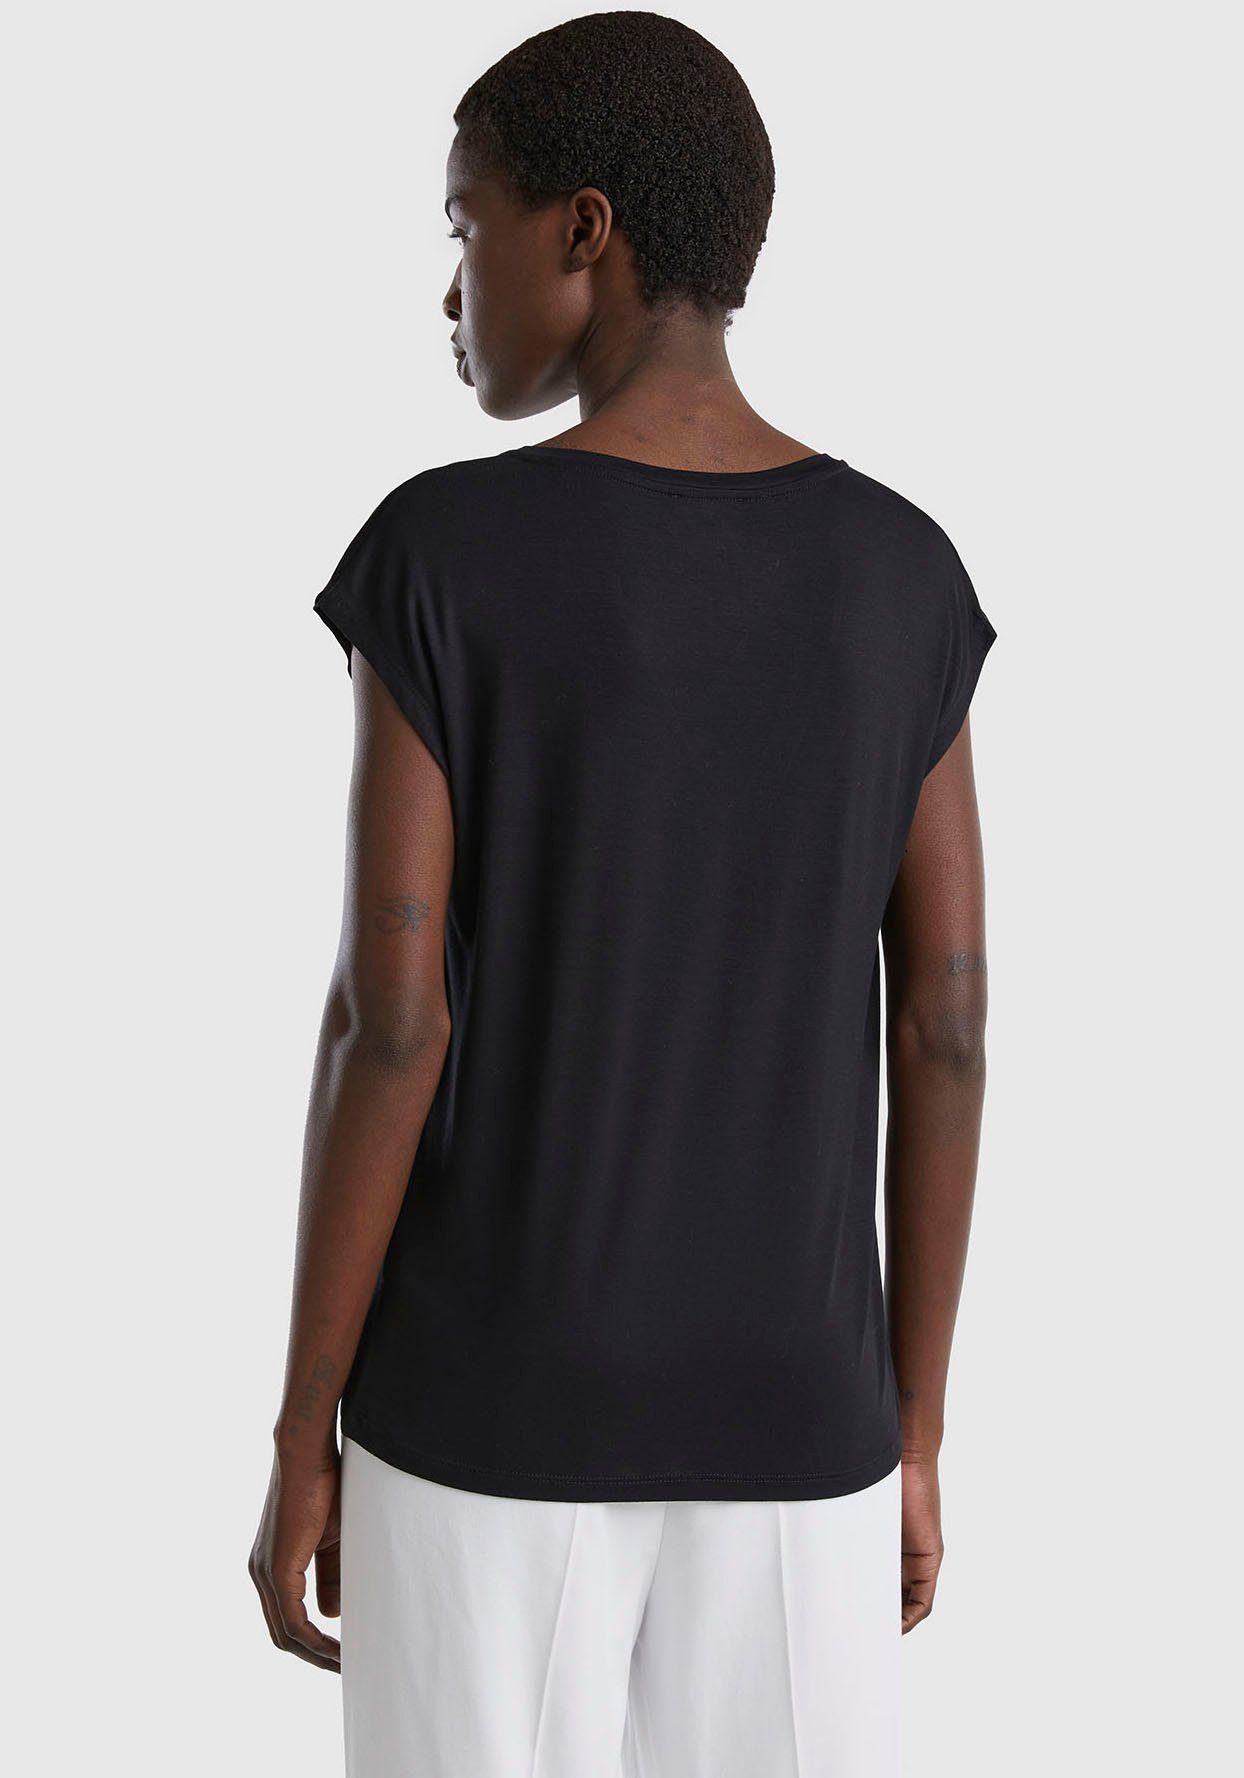 V-Shirt lässiger Passform United in of schwarz Benetton Colors T-SHIRT